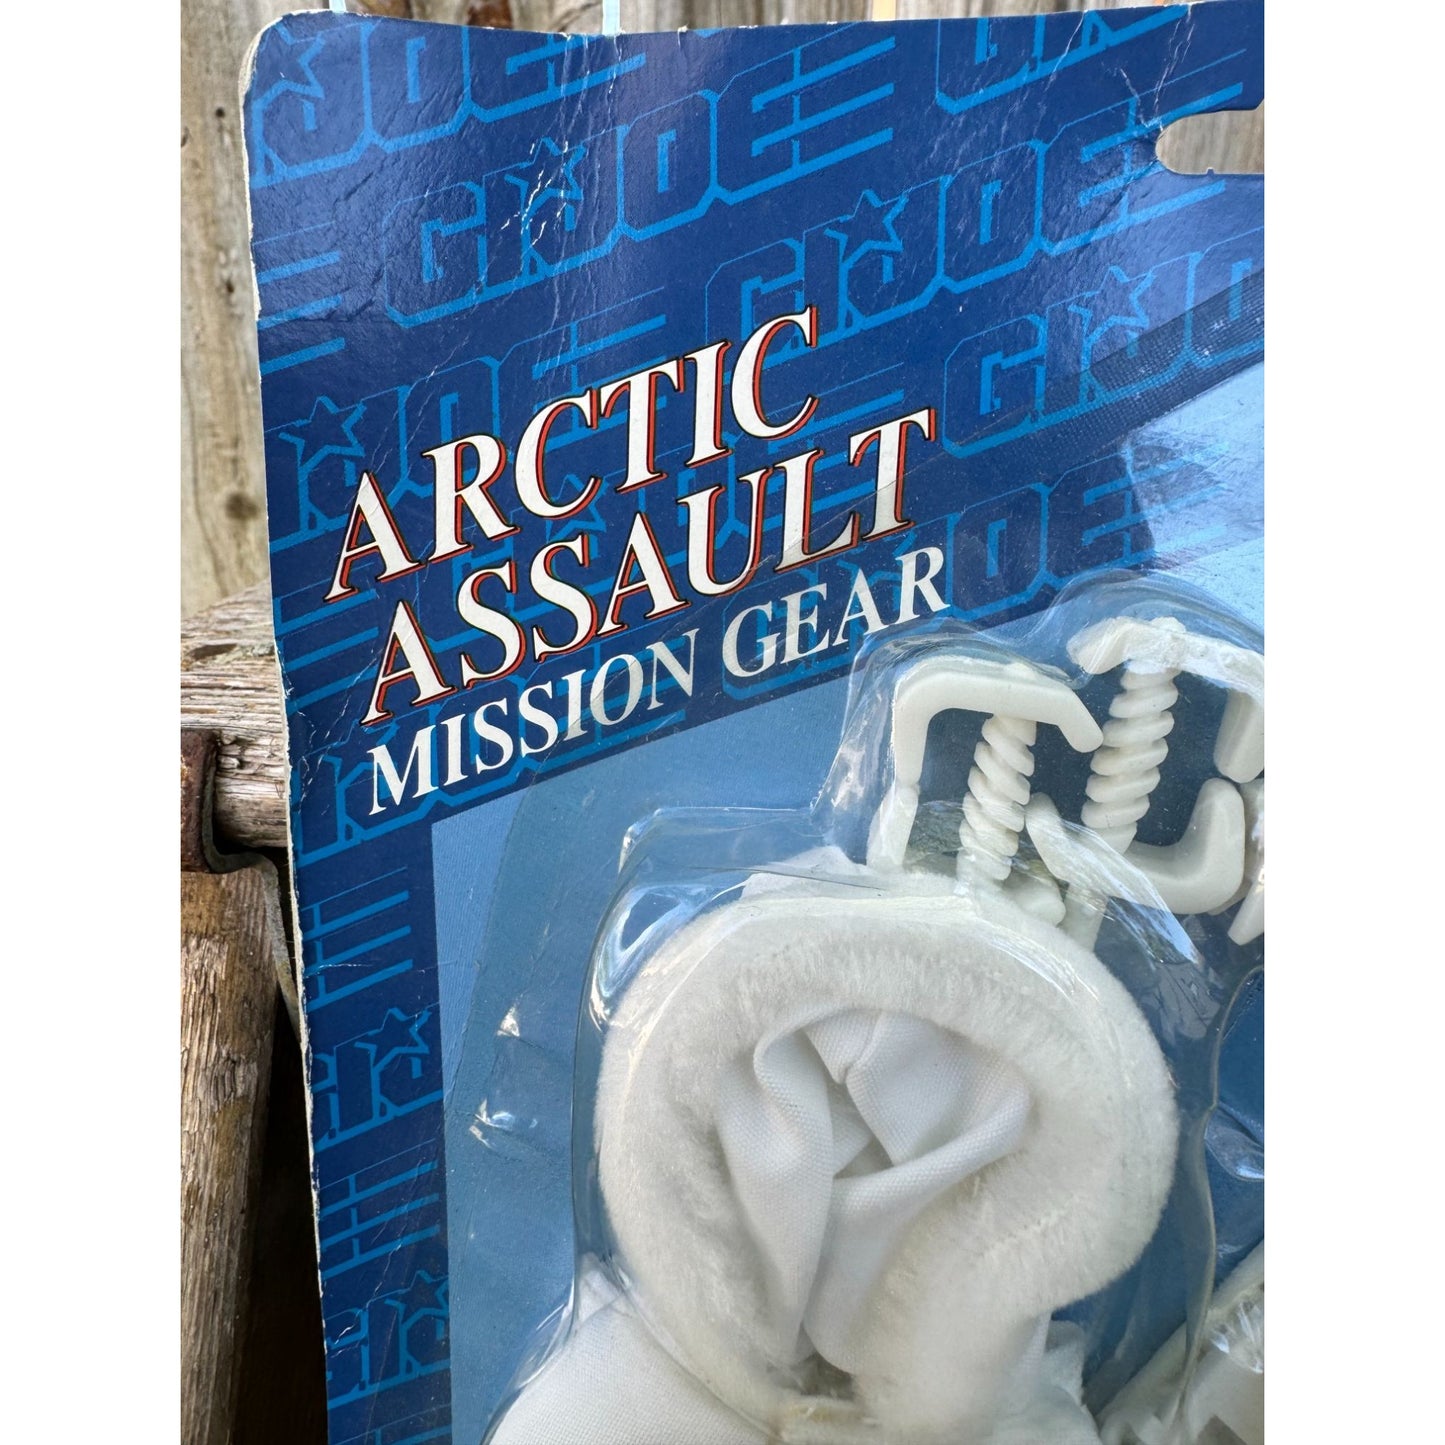 92' G.I. Joe Hall of Fame Arctic Assault Mission Gear